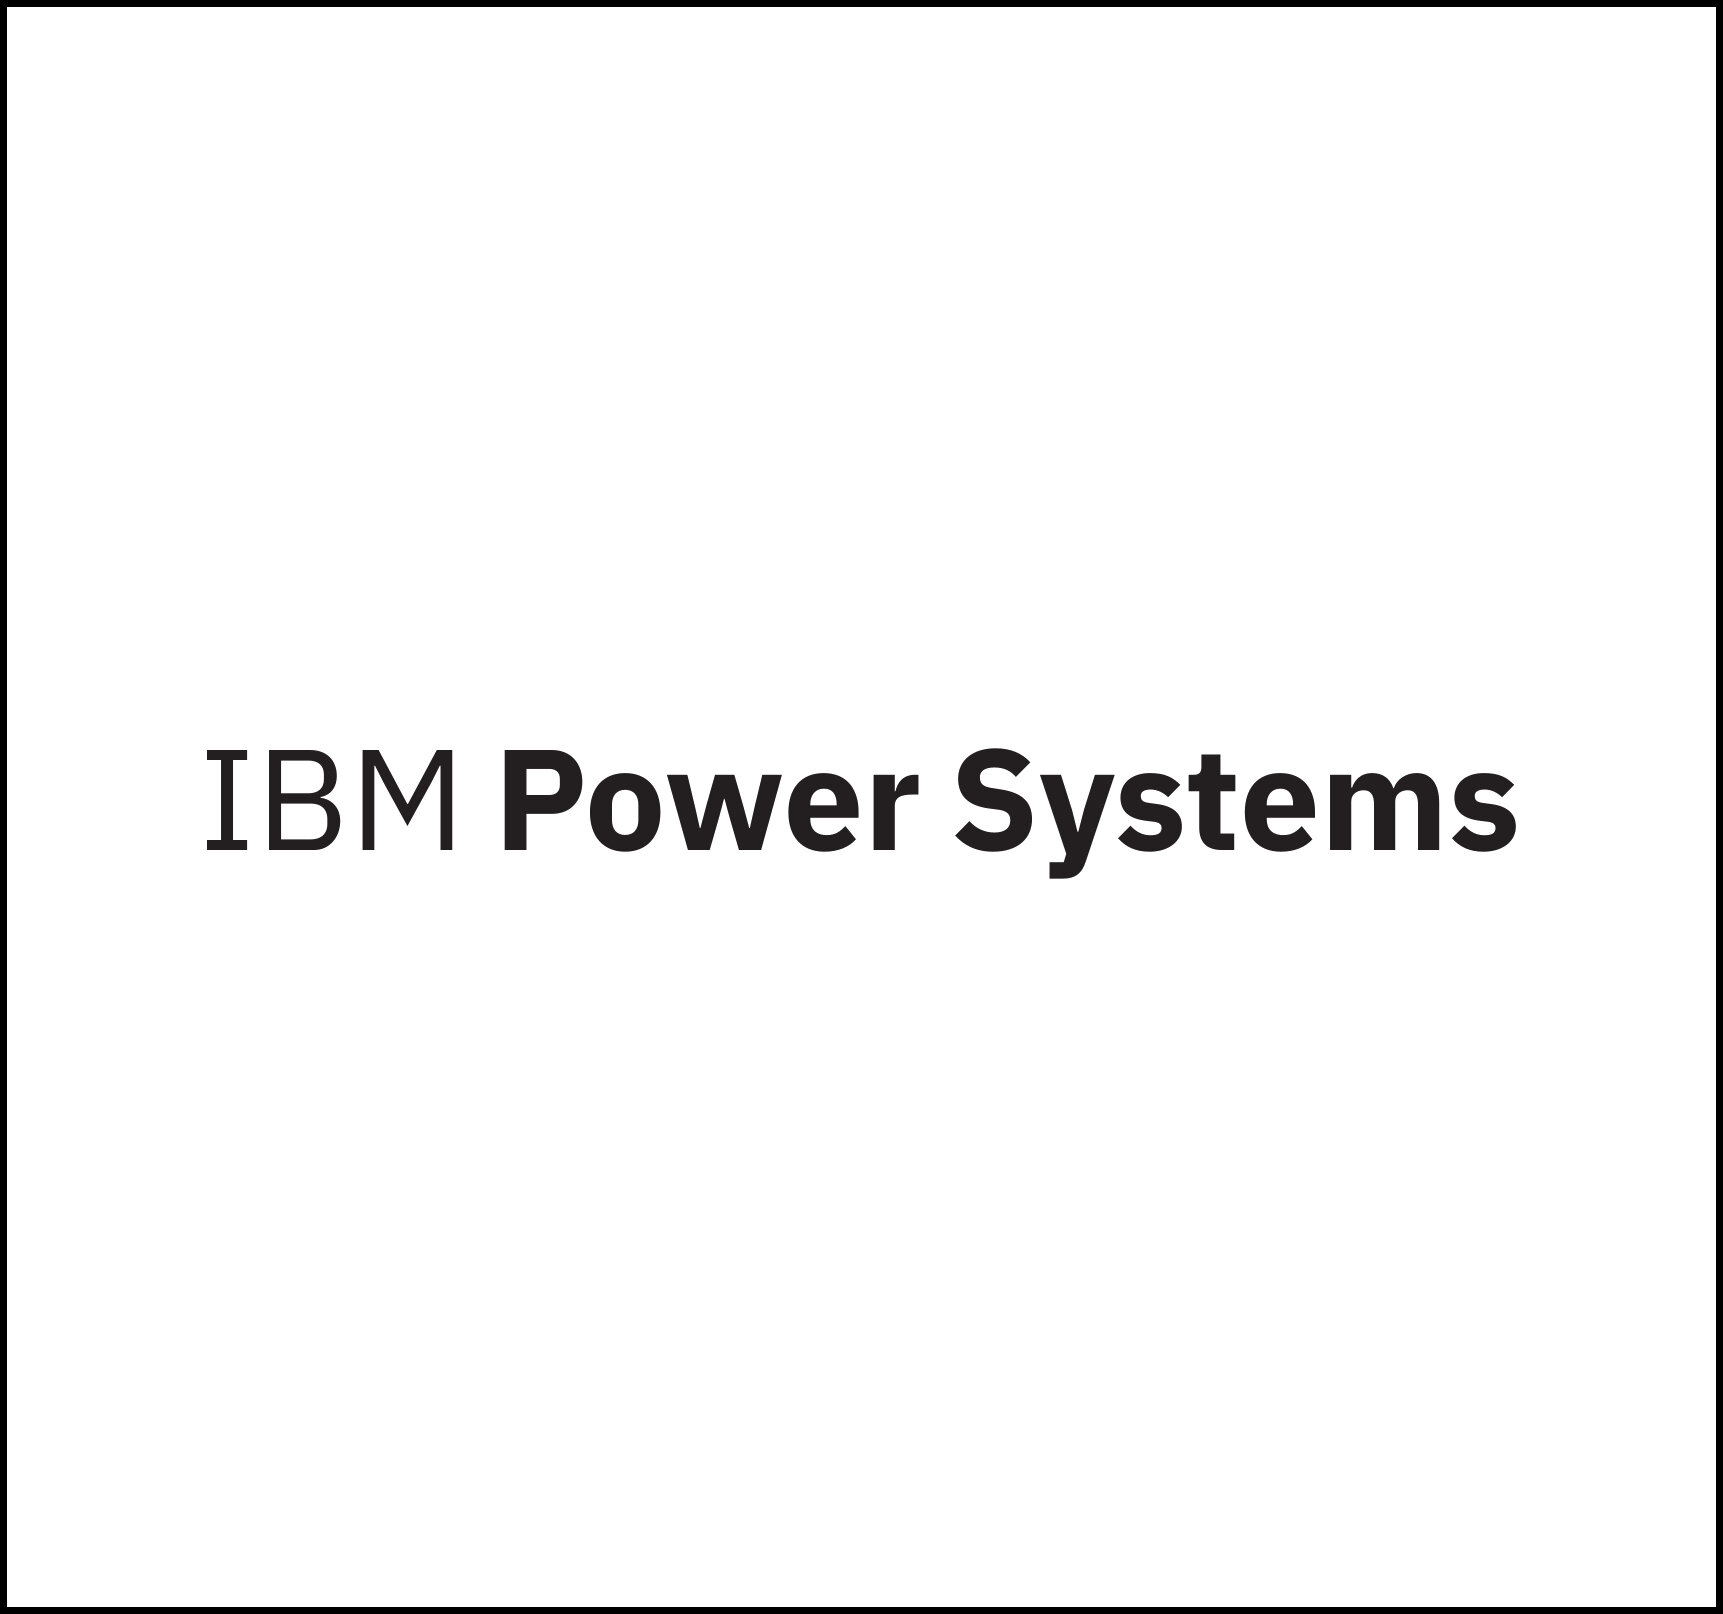 17IBM_Power_Systems_logotype_pos_CMYK.jpg